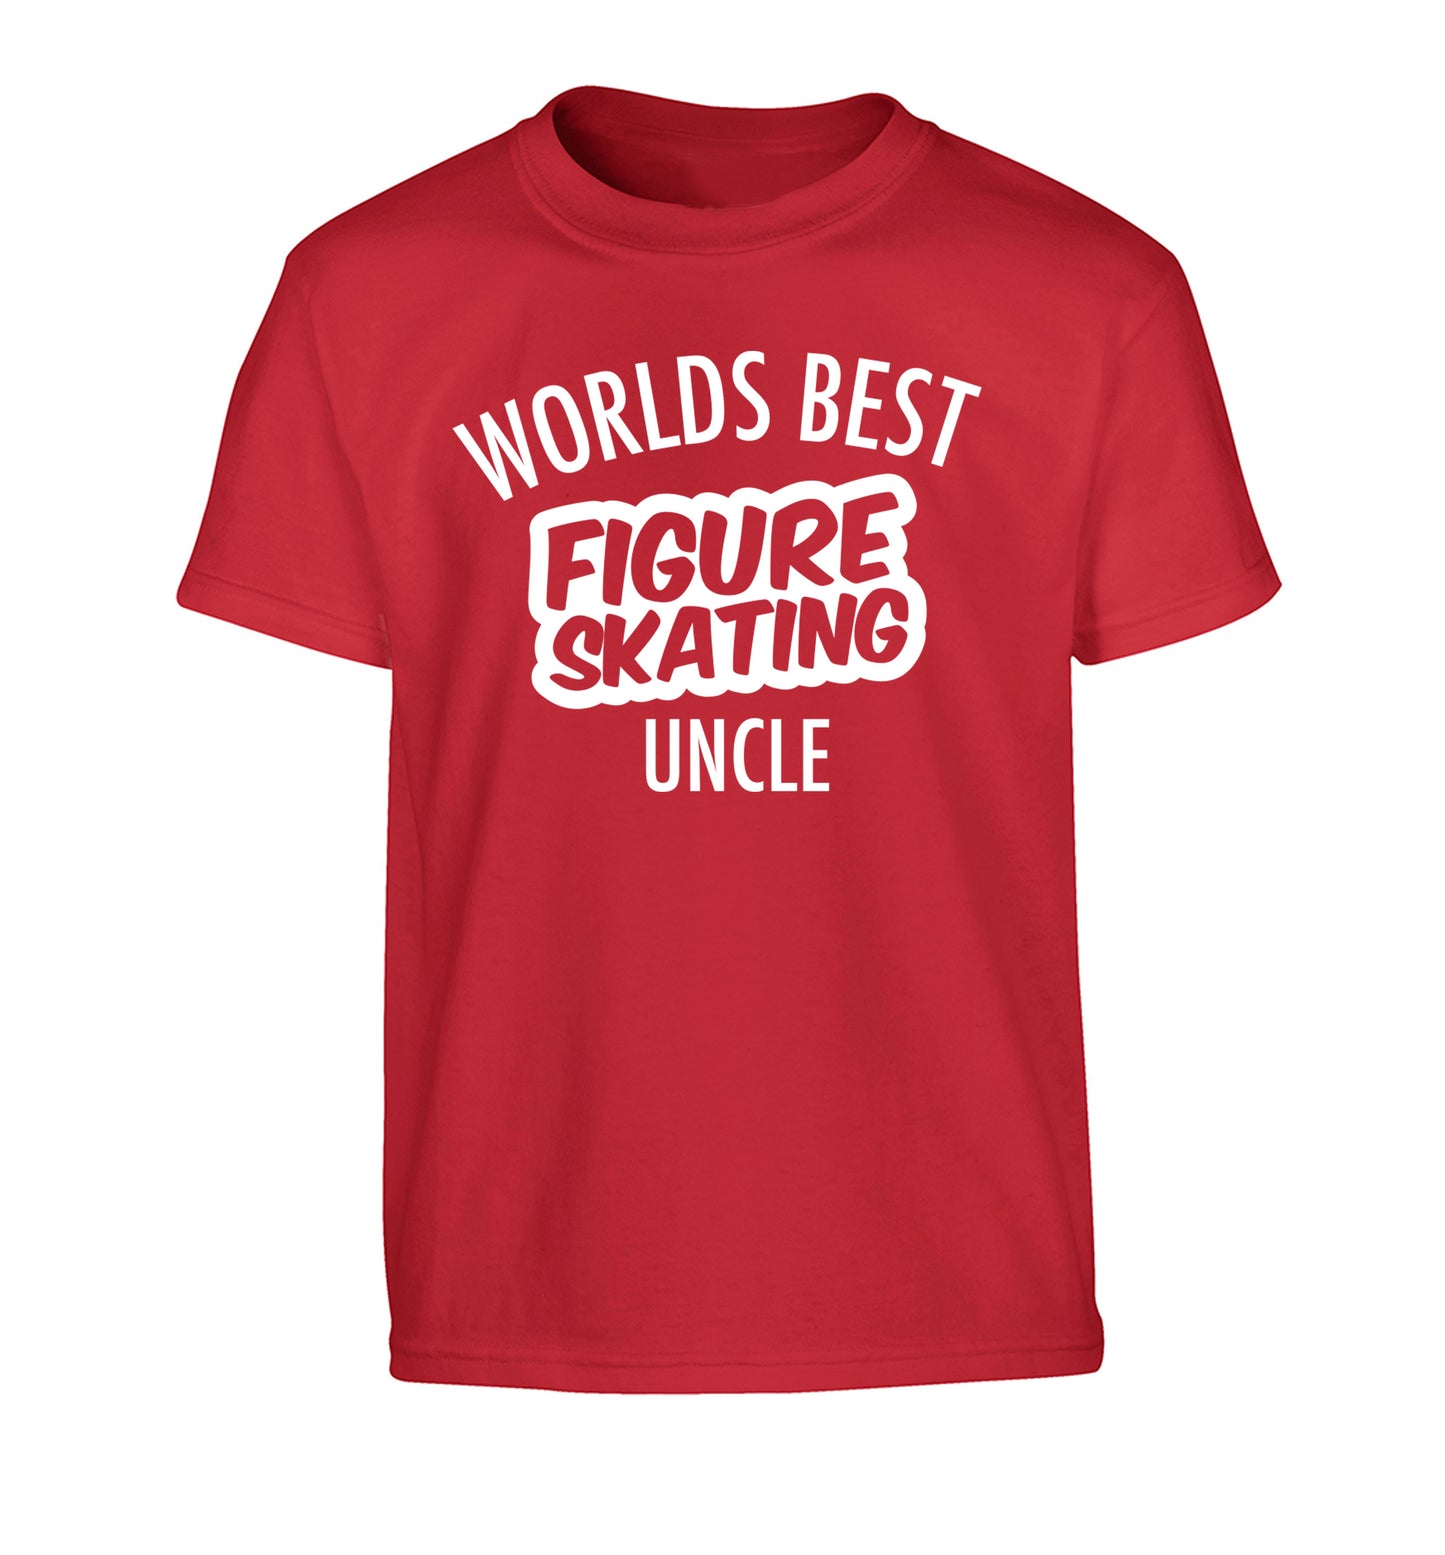 Worlds best figure skating uncle Children's red Tshirt 12-14 Years